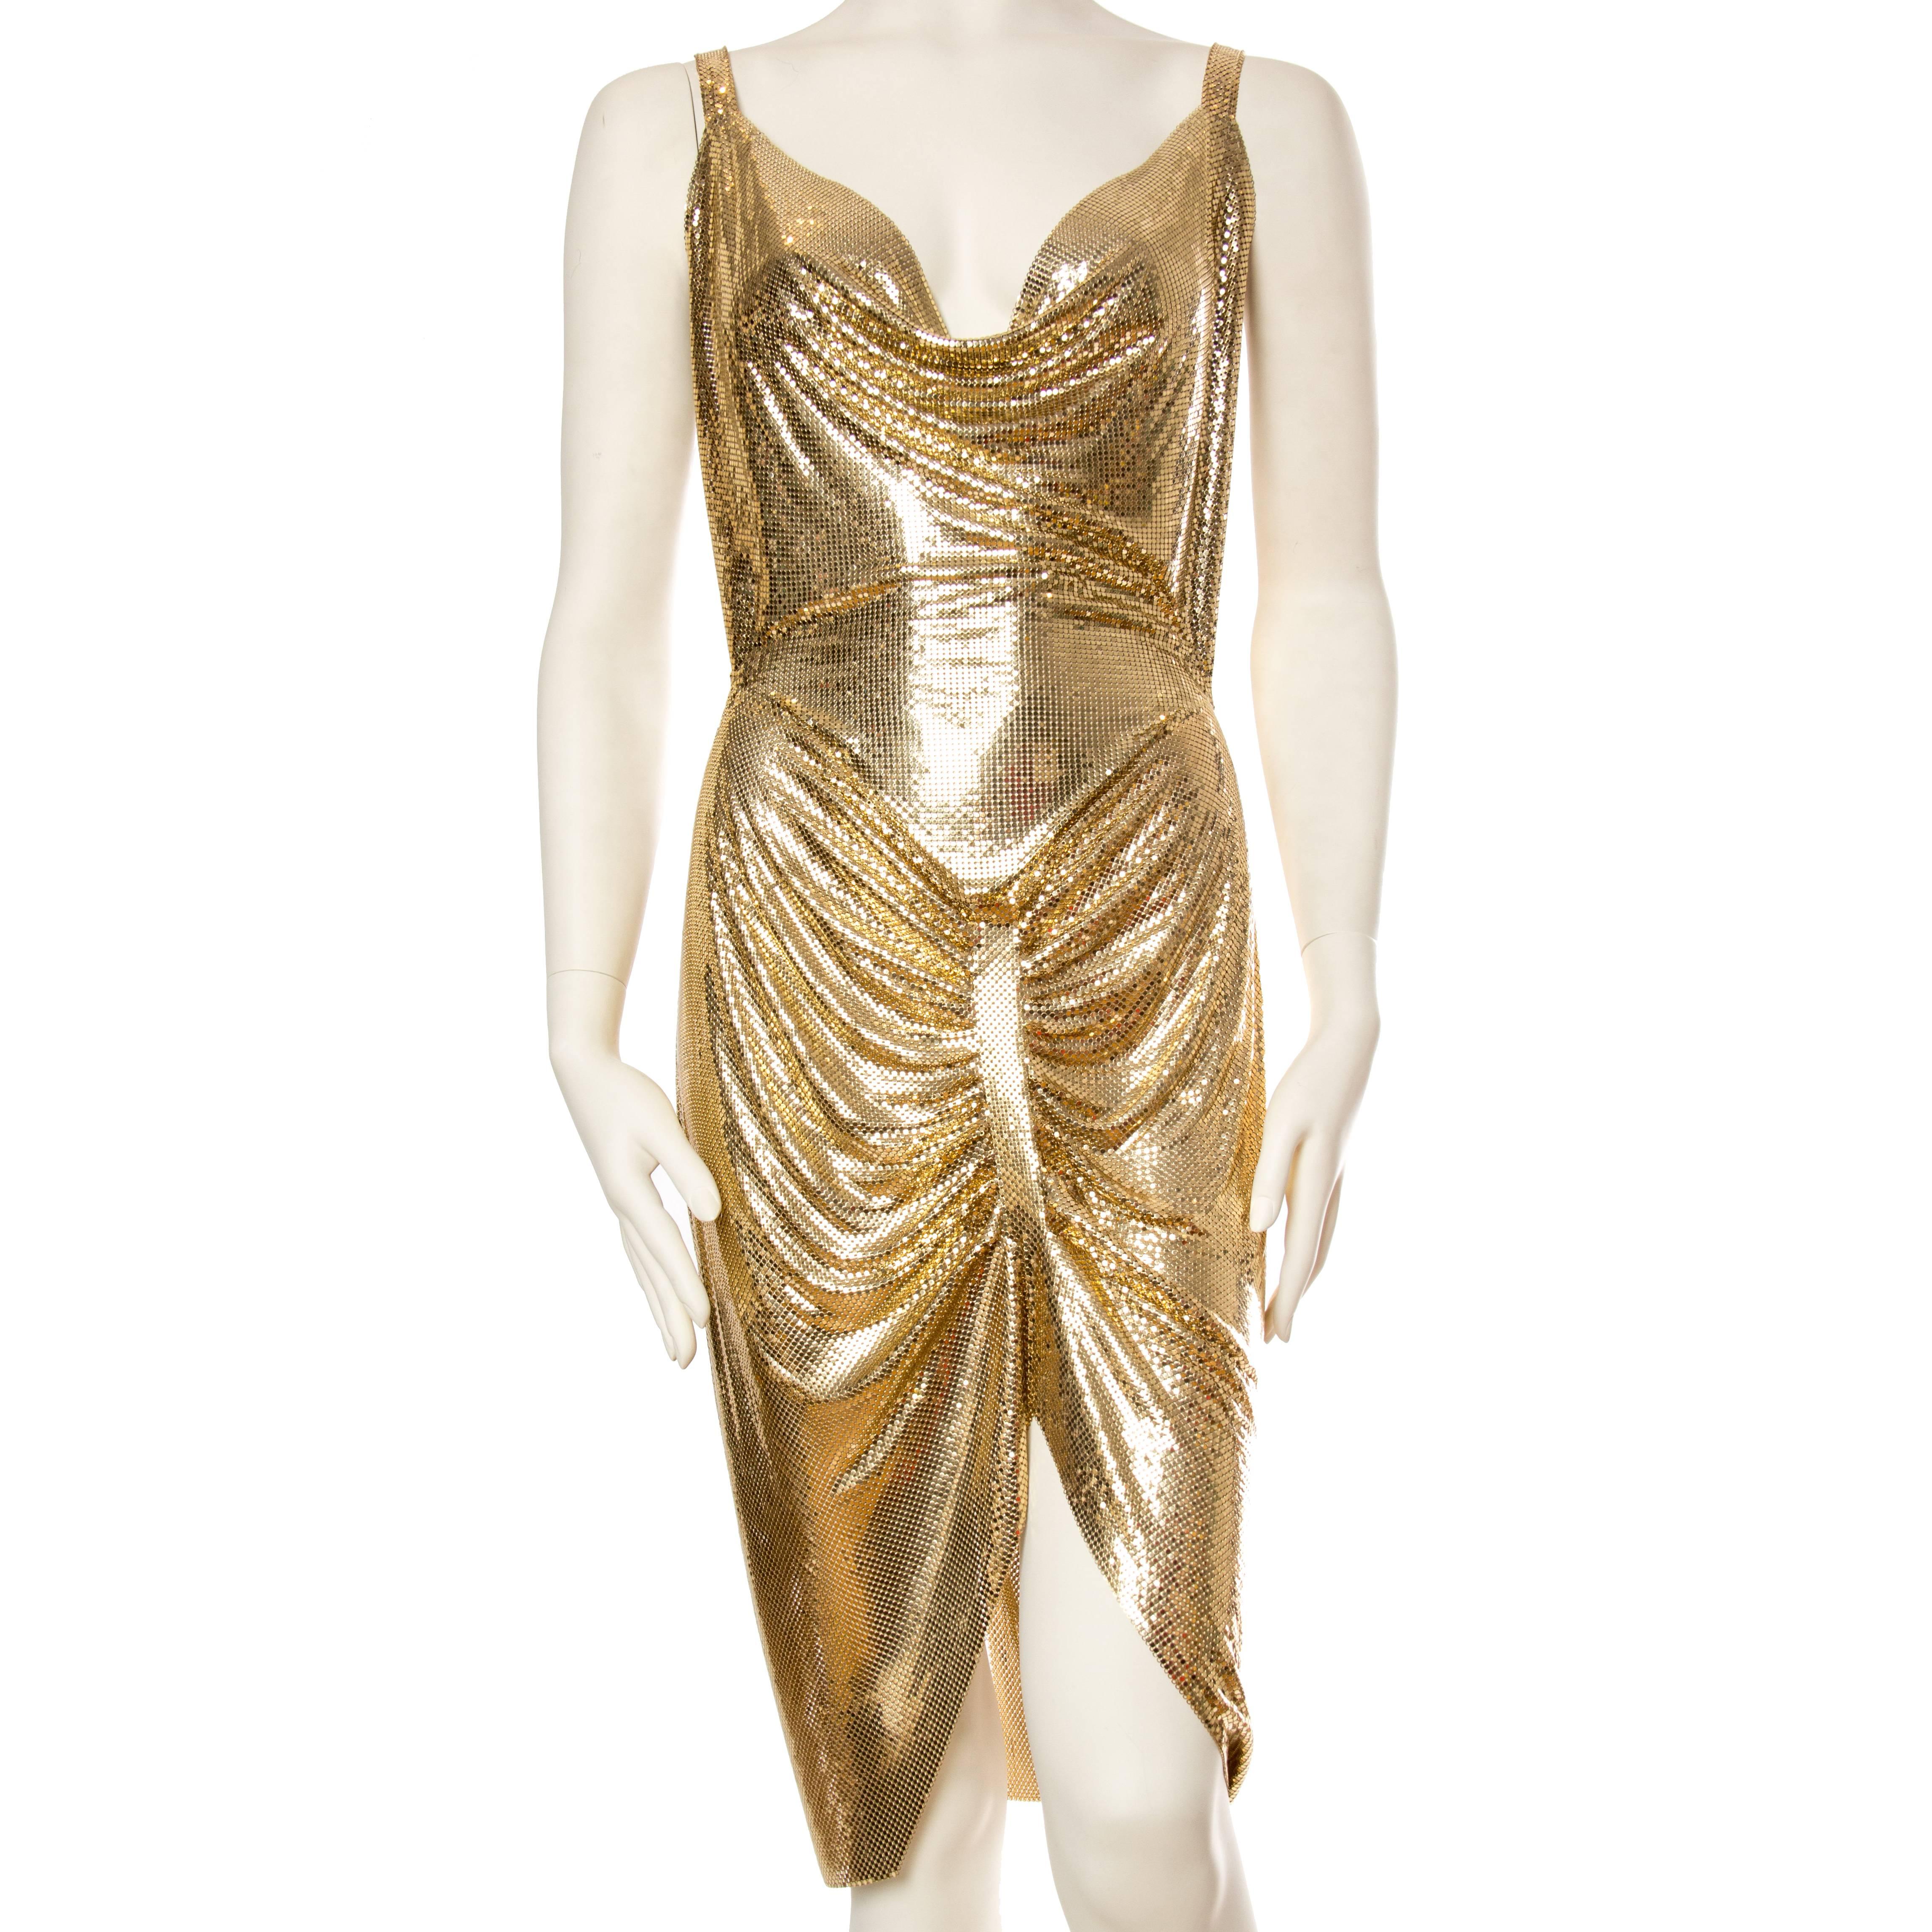 Phenomenal Gold Metal Mesh Dress and Hood